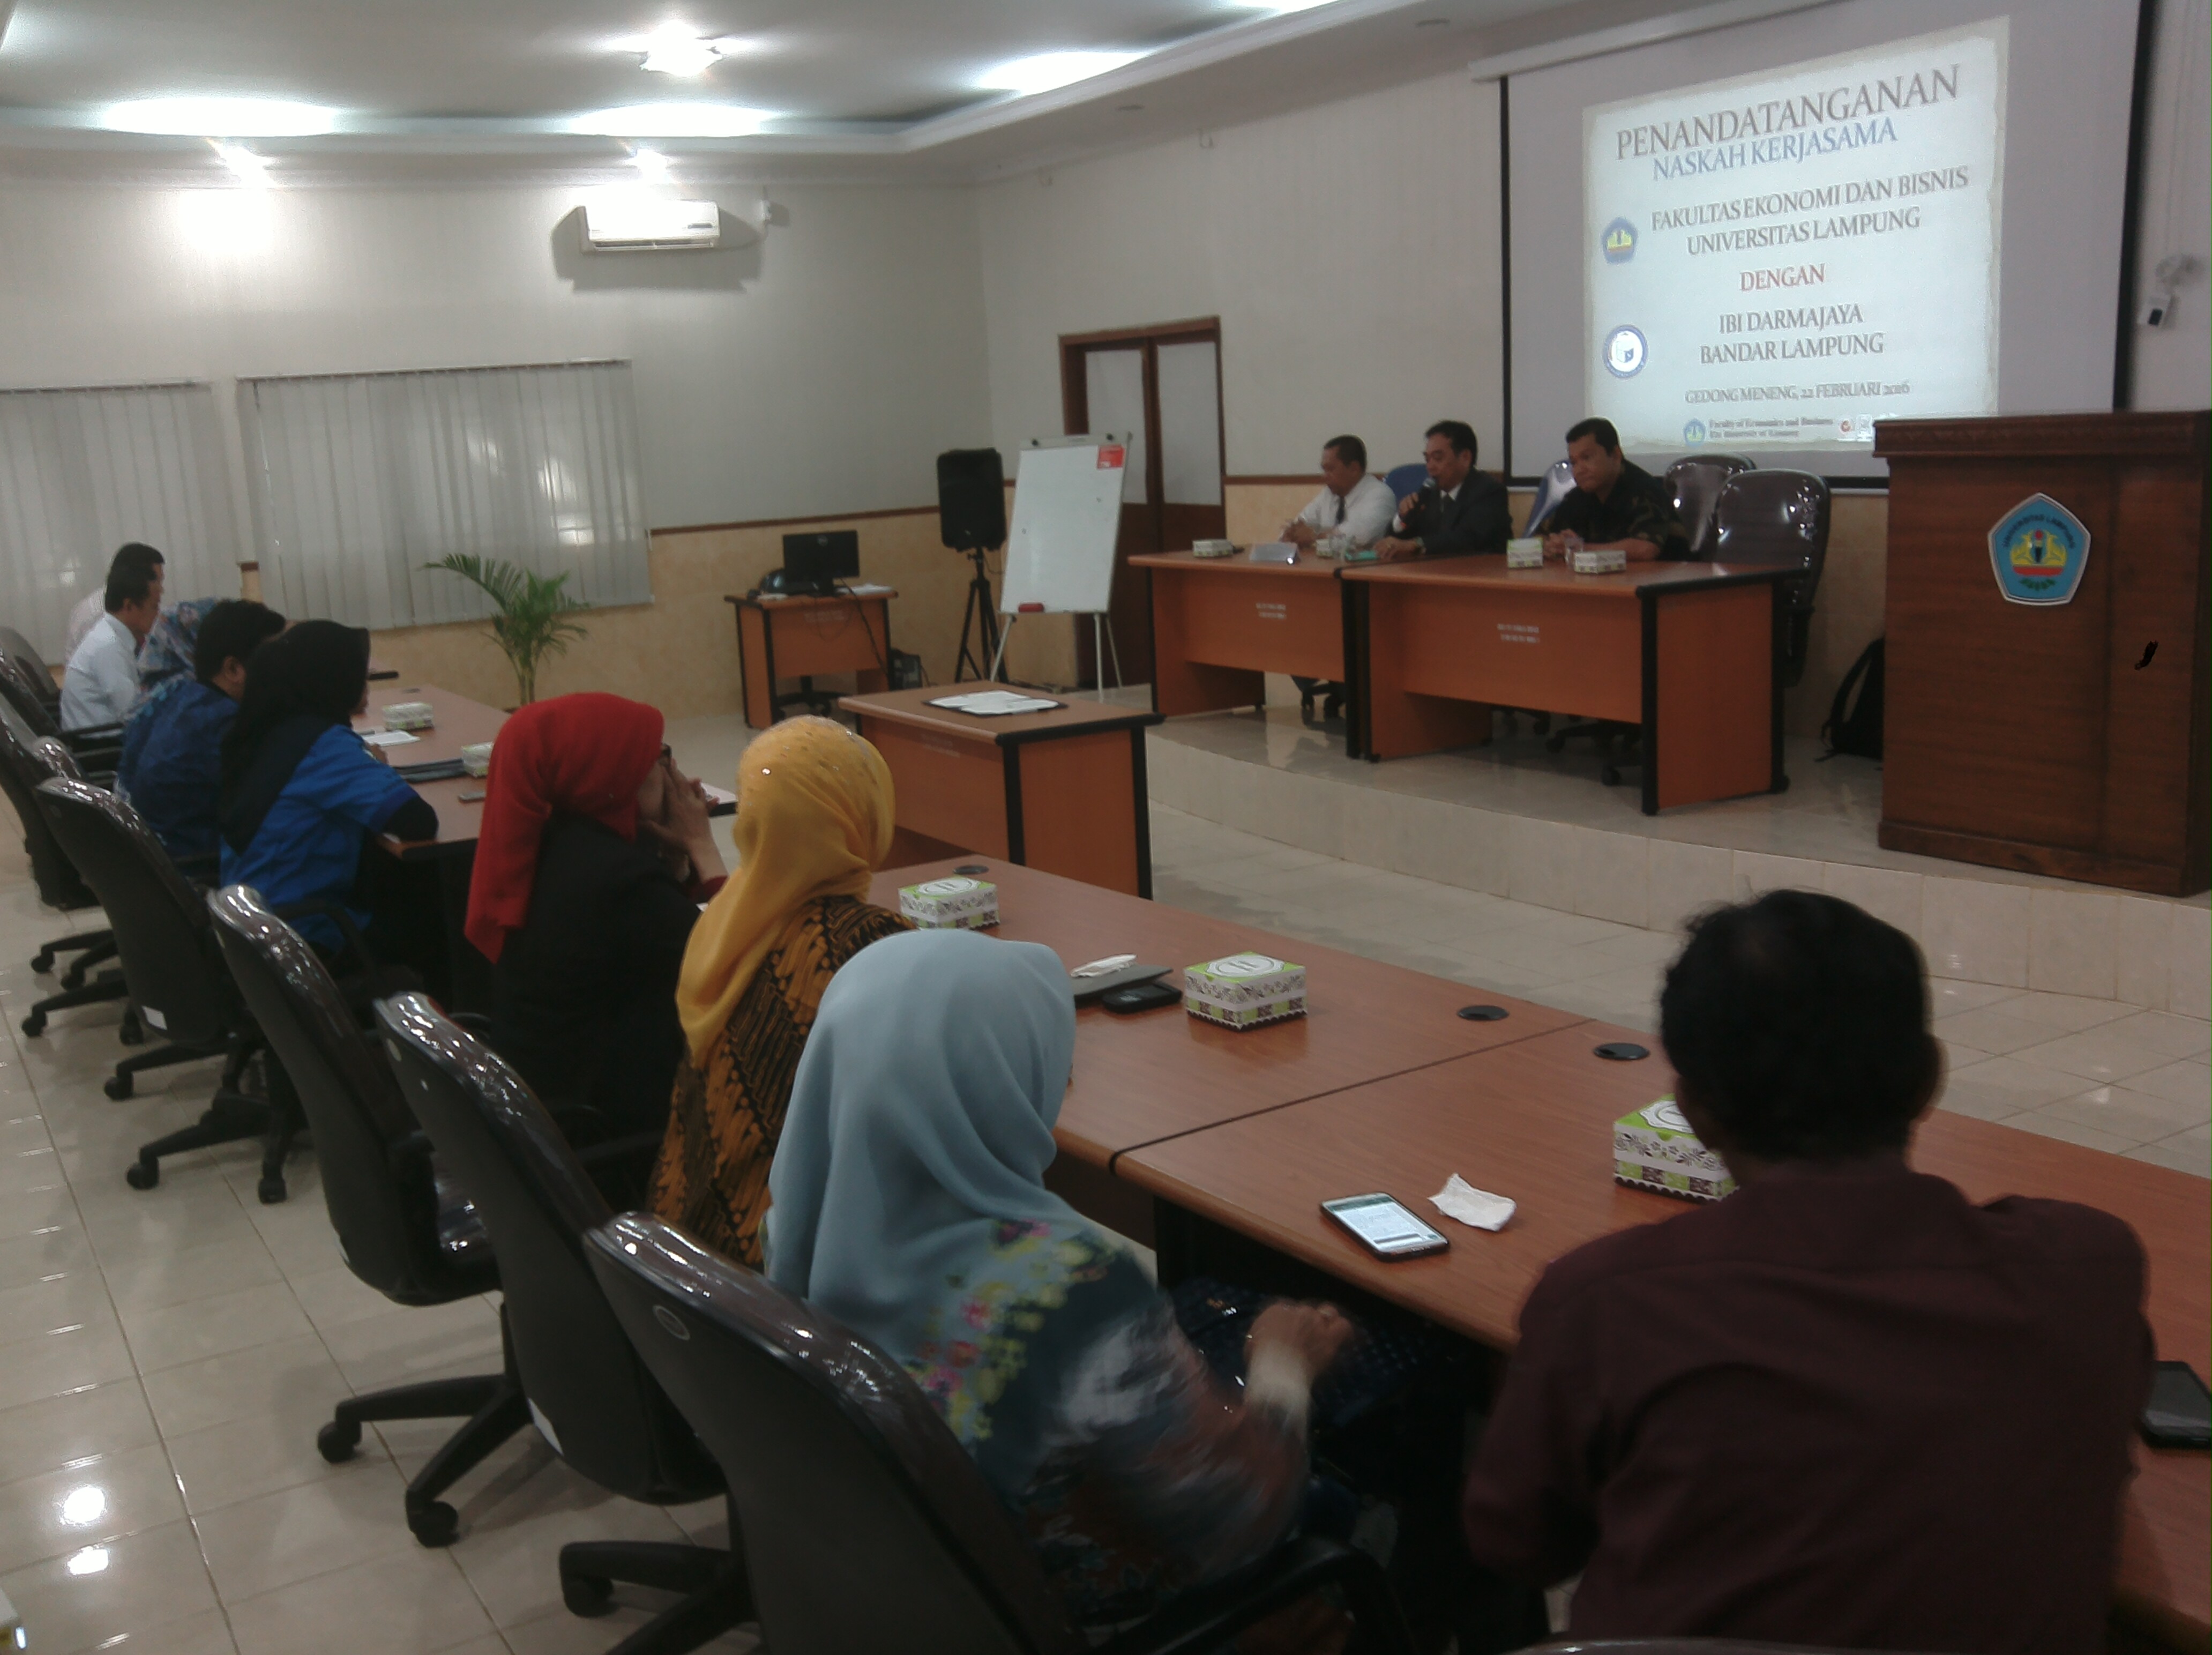 Cooperation between Faculty of Economics and Business with IBI Darmajaya Bandar Lampung